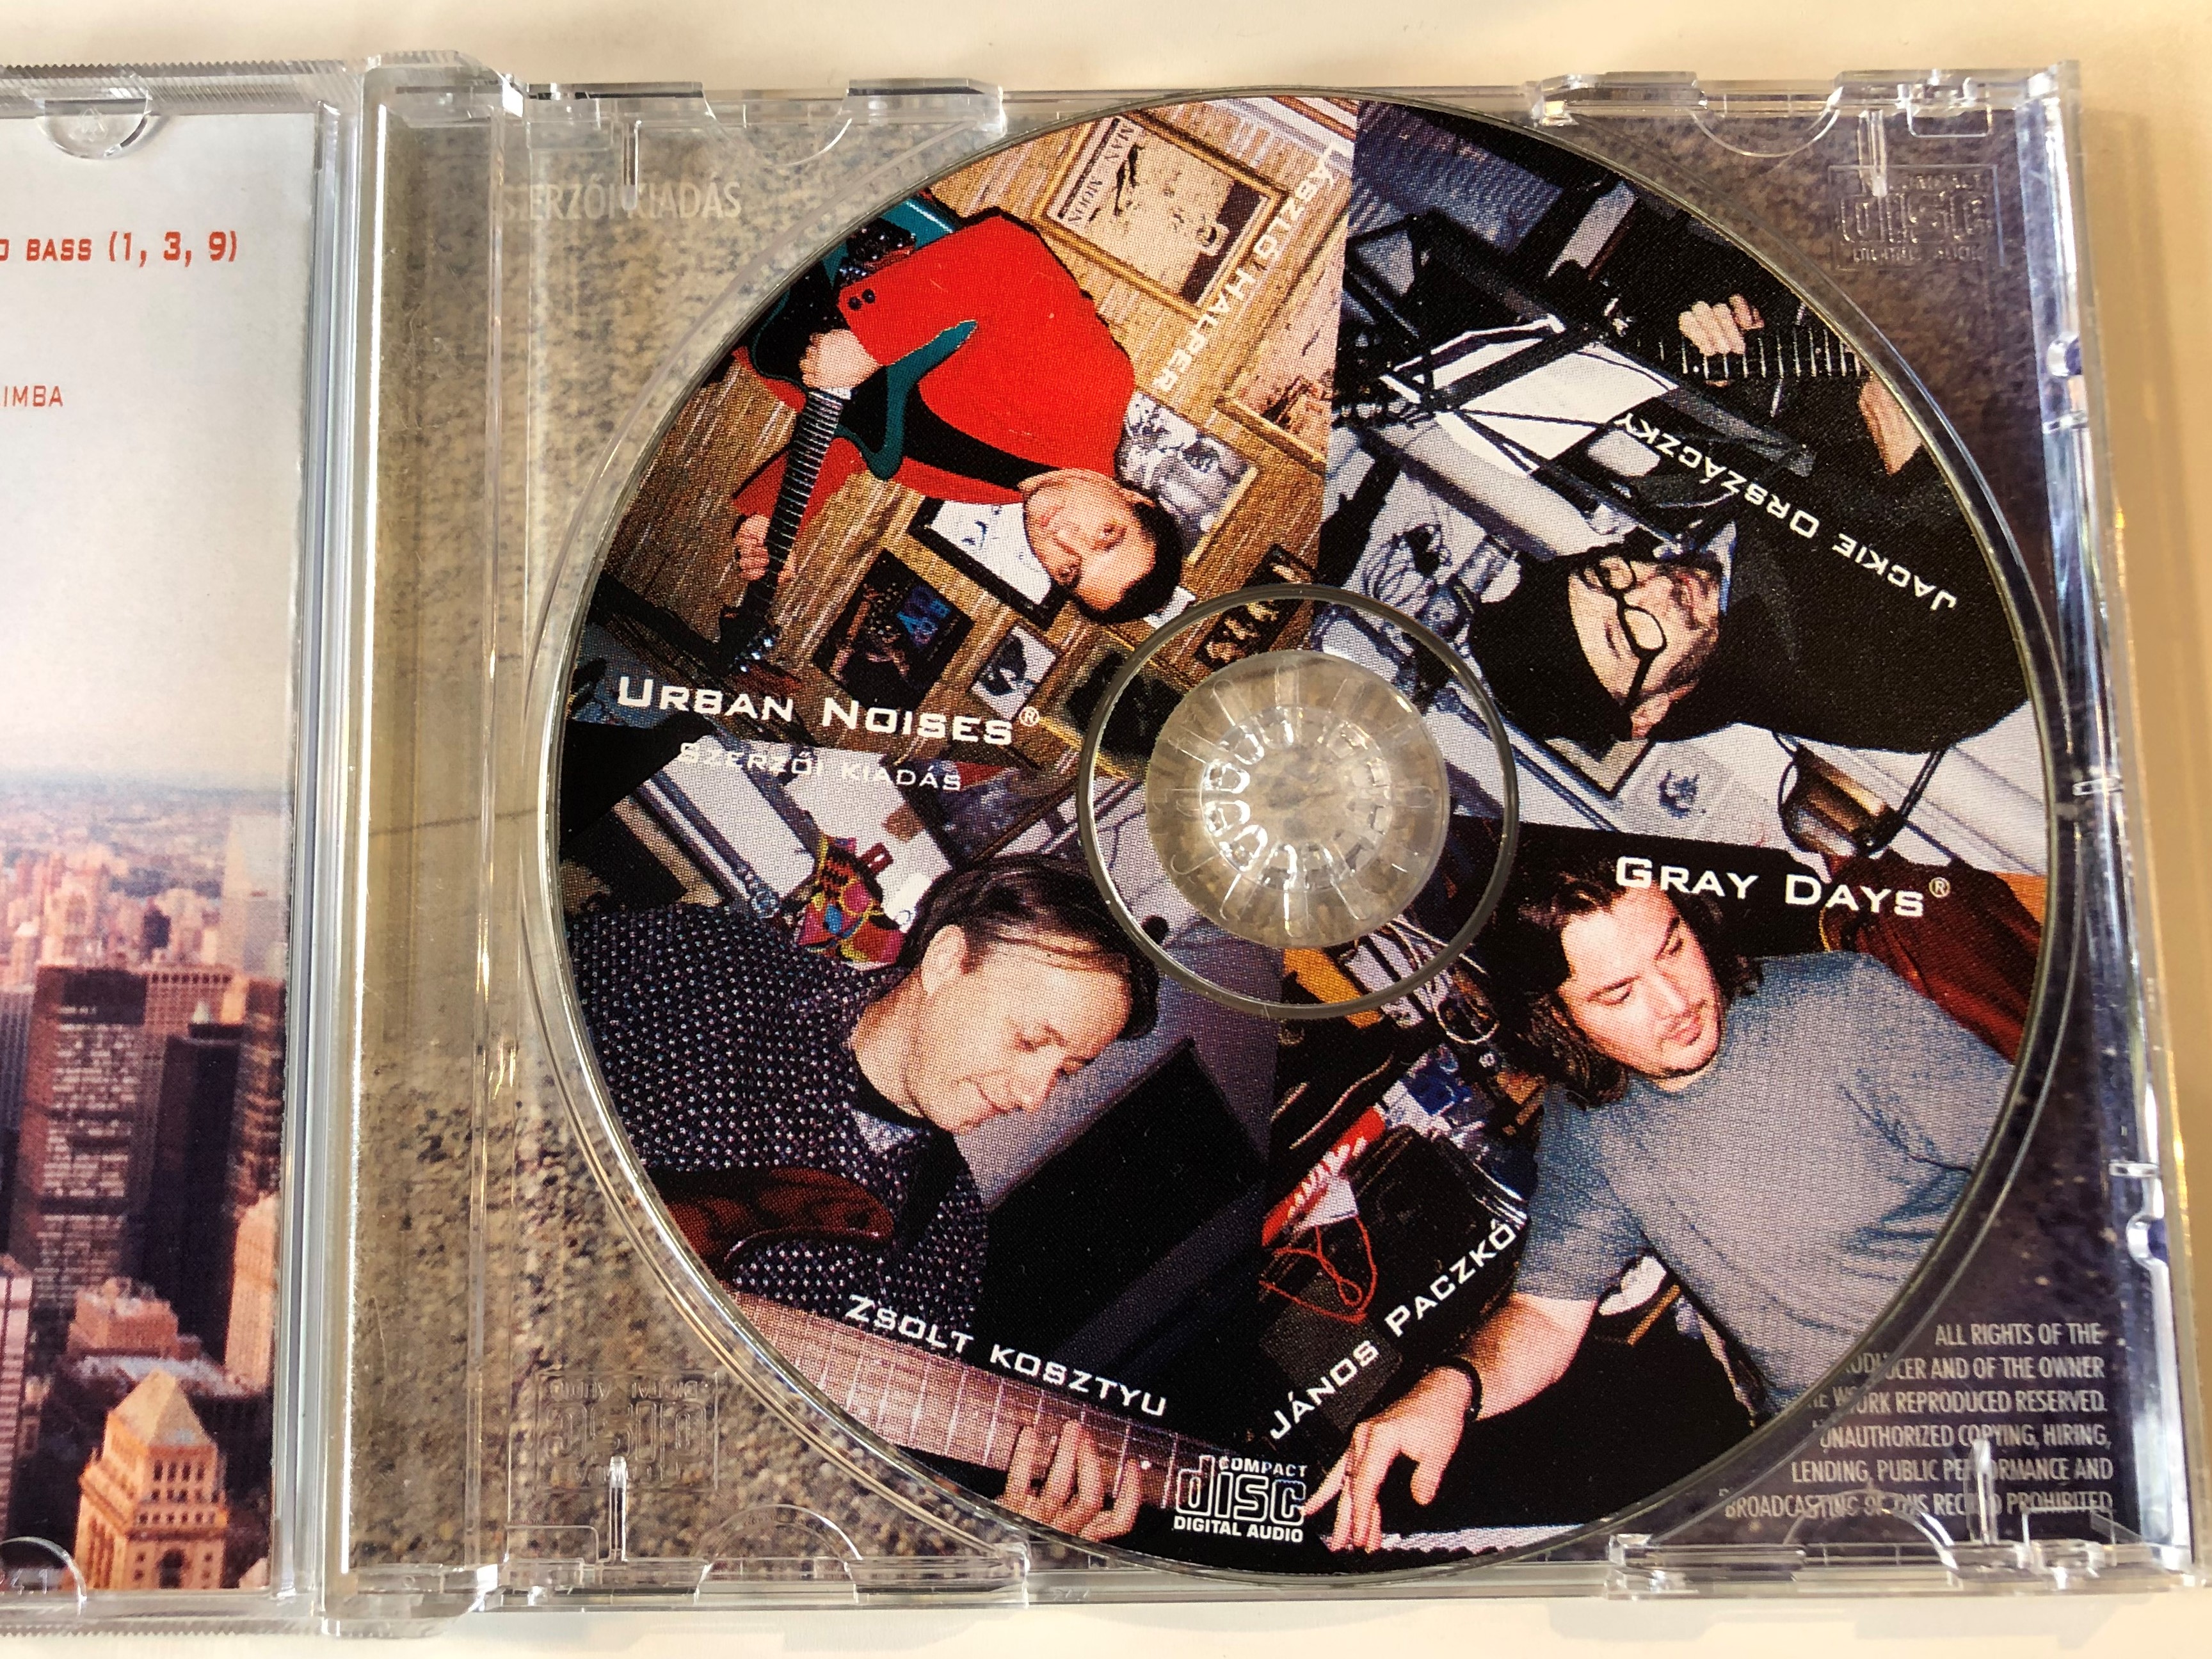 urban-noises-featuring-jackie-orszaczky-gray-days-uno-records-audio-cd-2004-5999888010209-3-.jpg